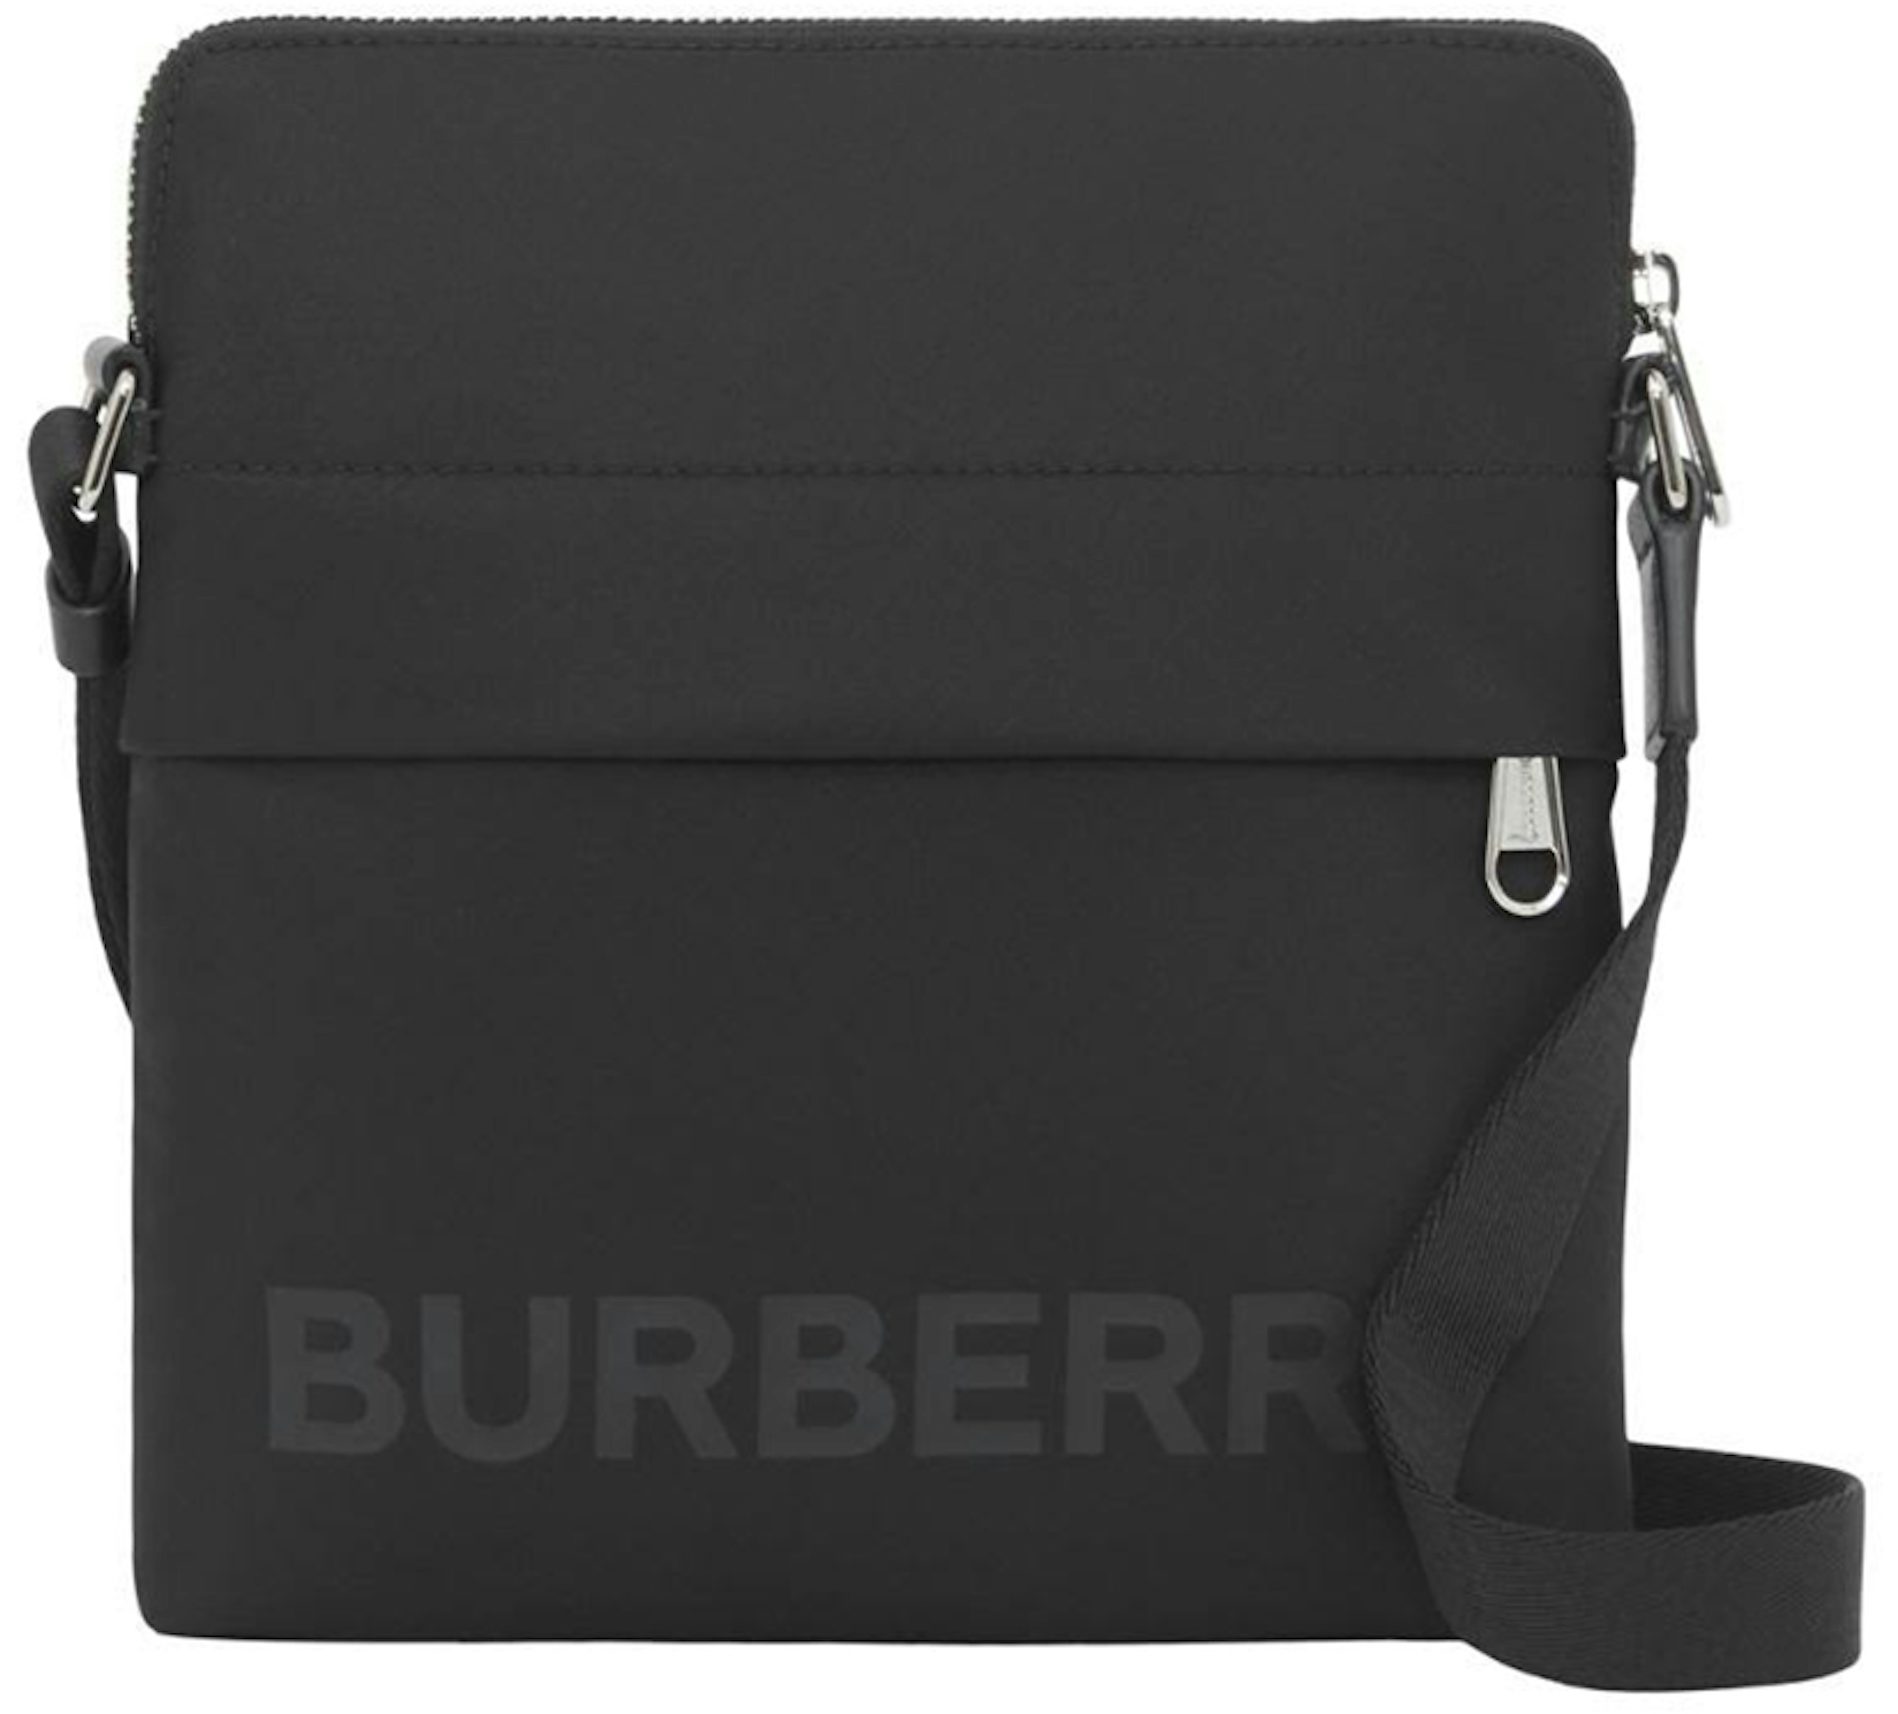 Burberry Logo Print Nylon Crossbody Bag Black in Nylon with Silver-tone - US